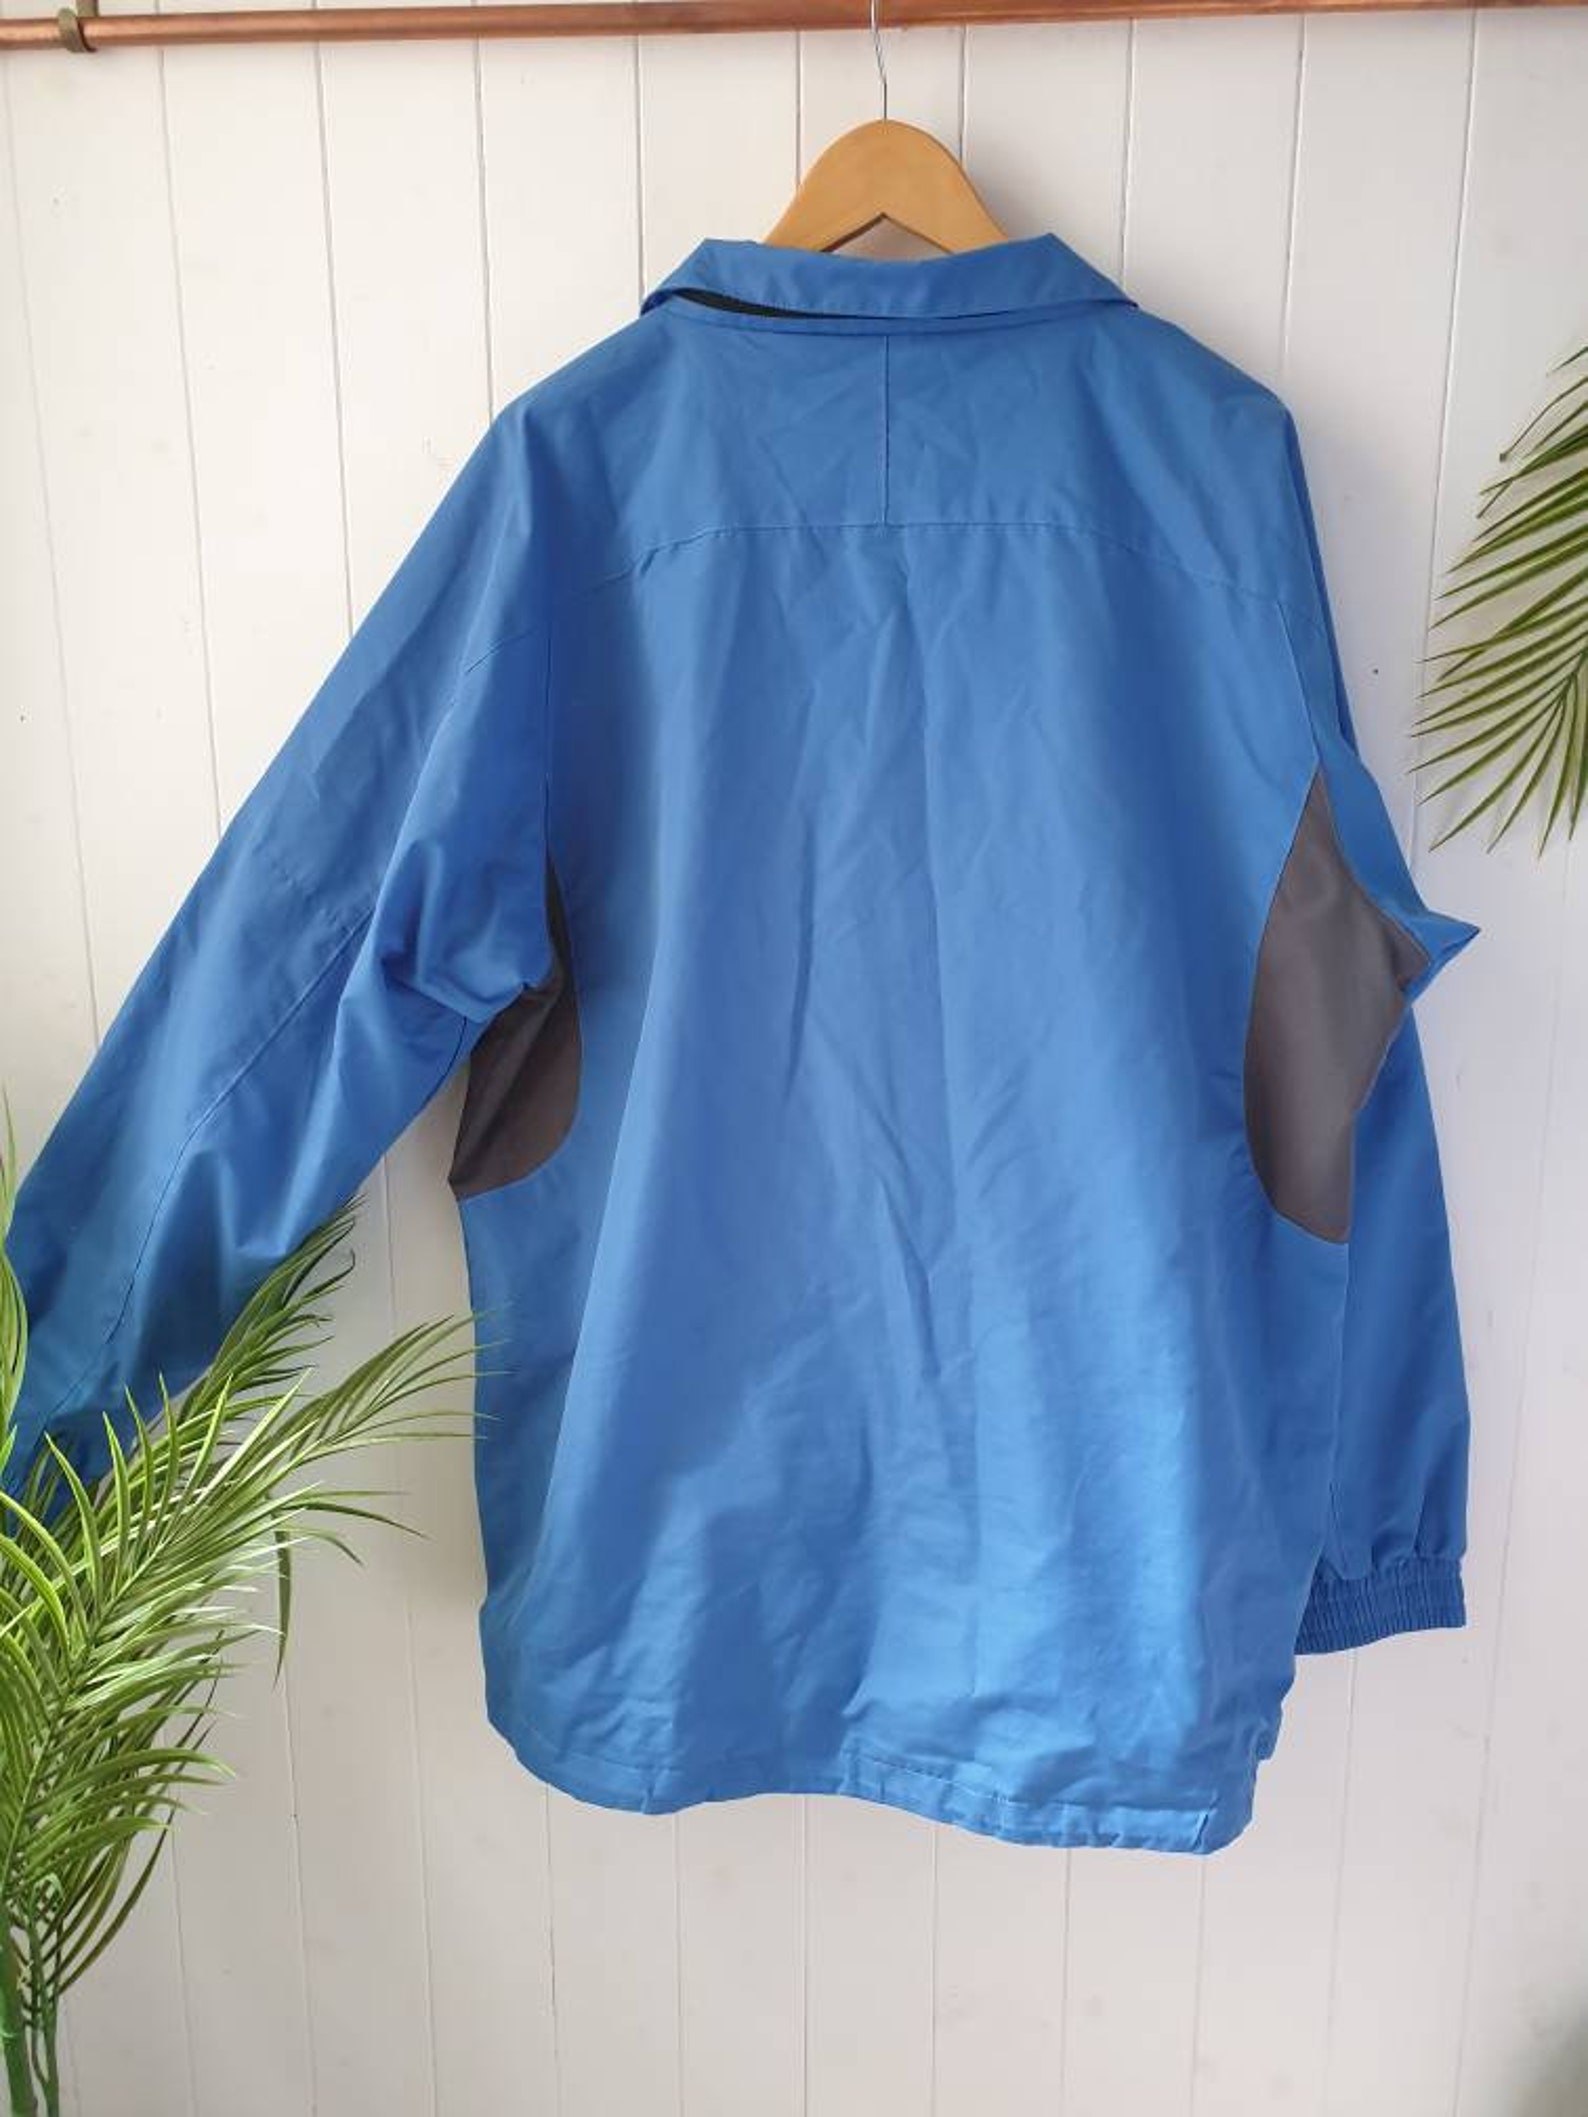 Vintage 90s campri jacket windbreaker 90s mens fashion | Etsy